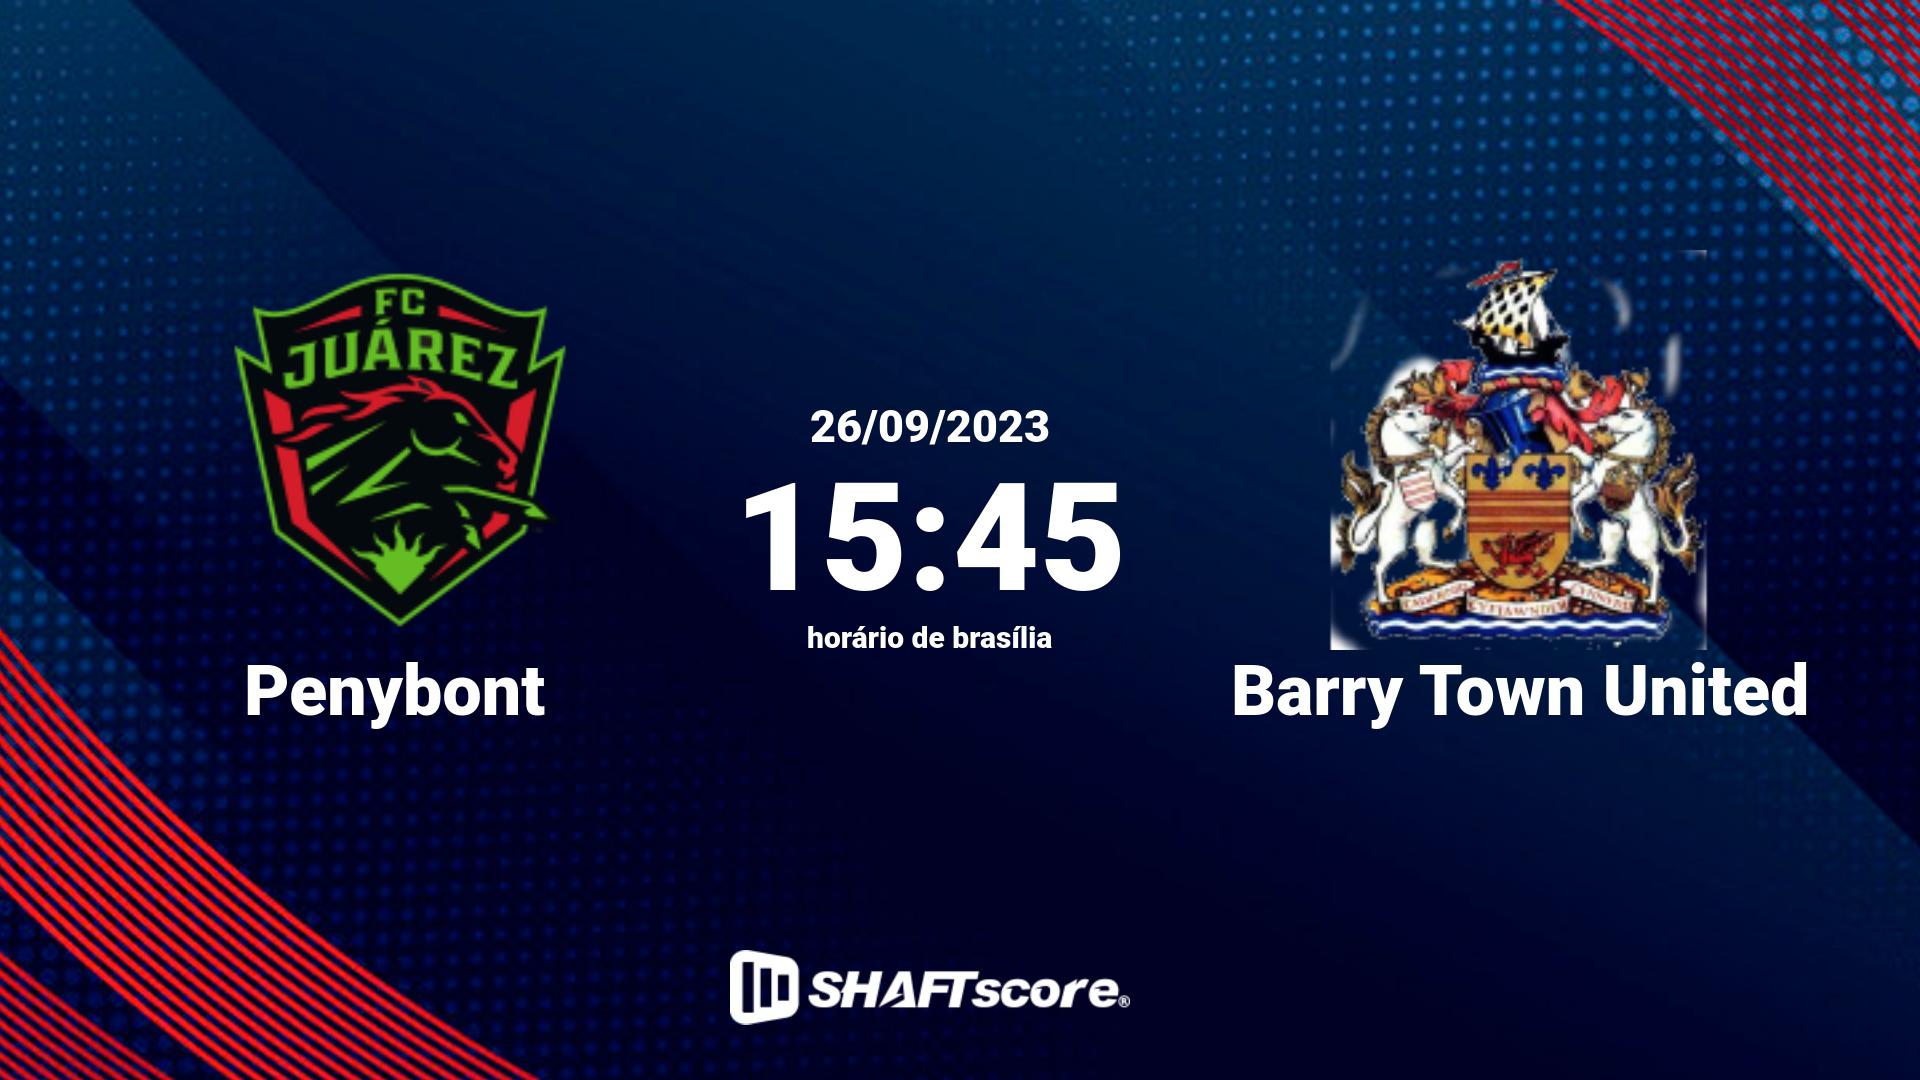 Estatísticas do jogo Penybont vs Barry Town United 26.09 15:45